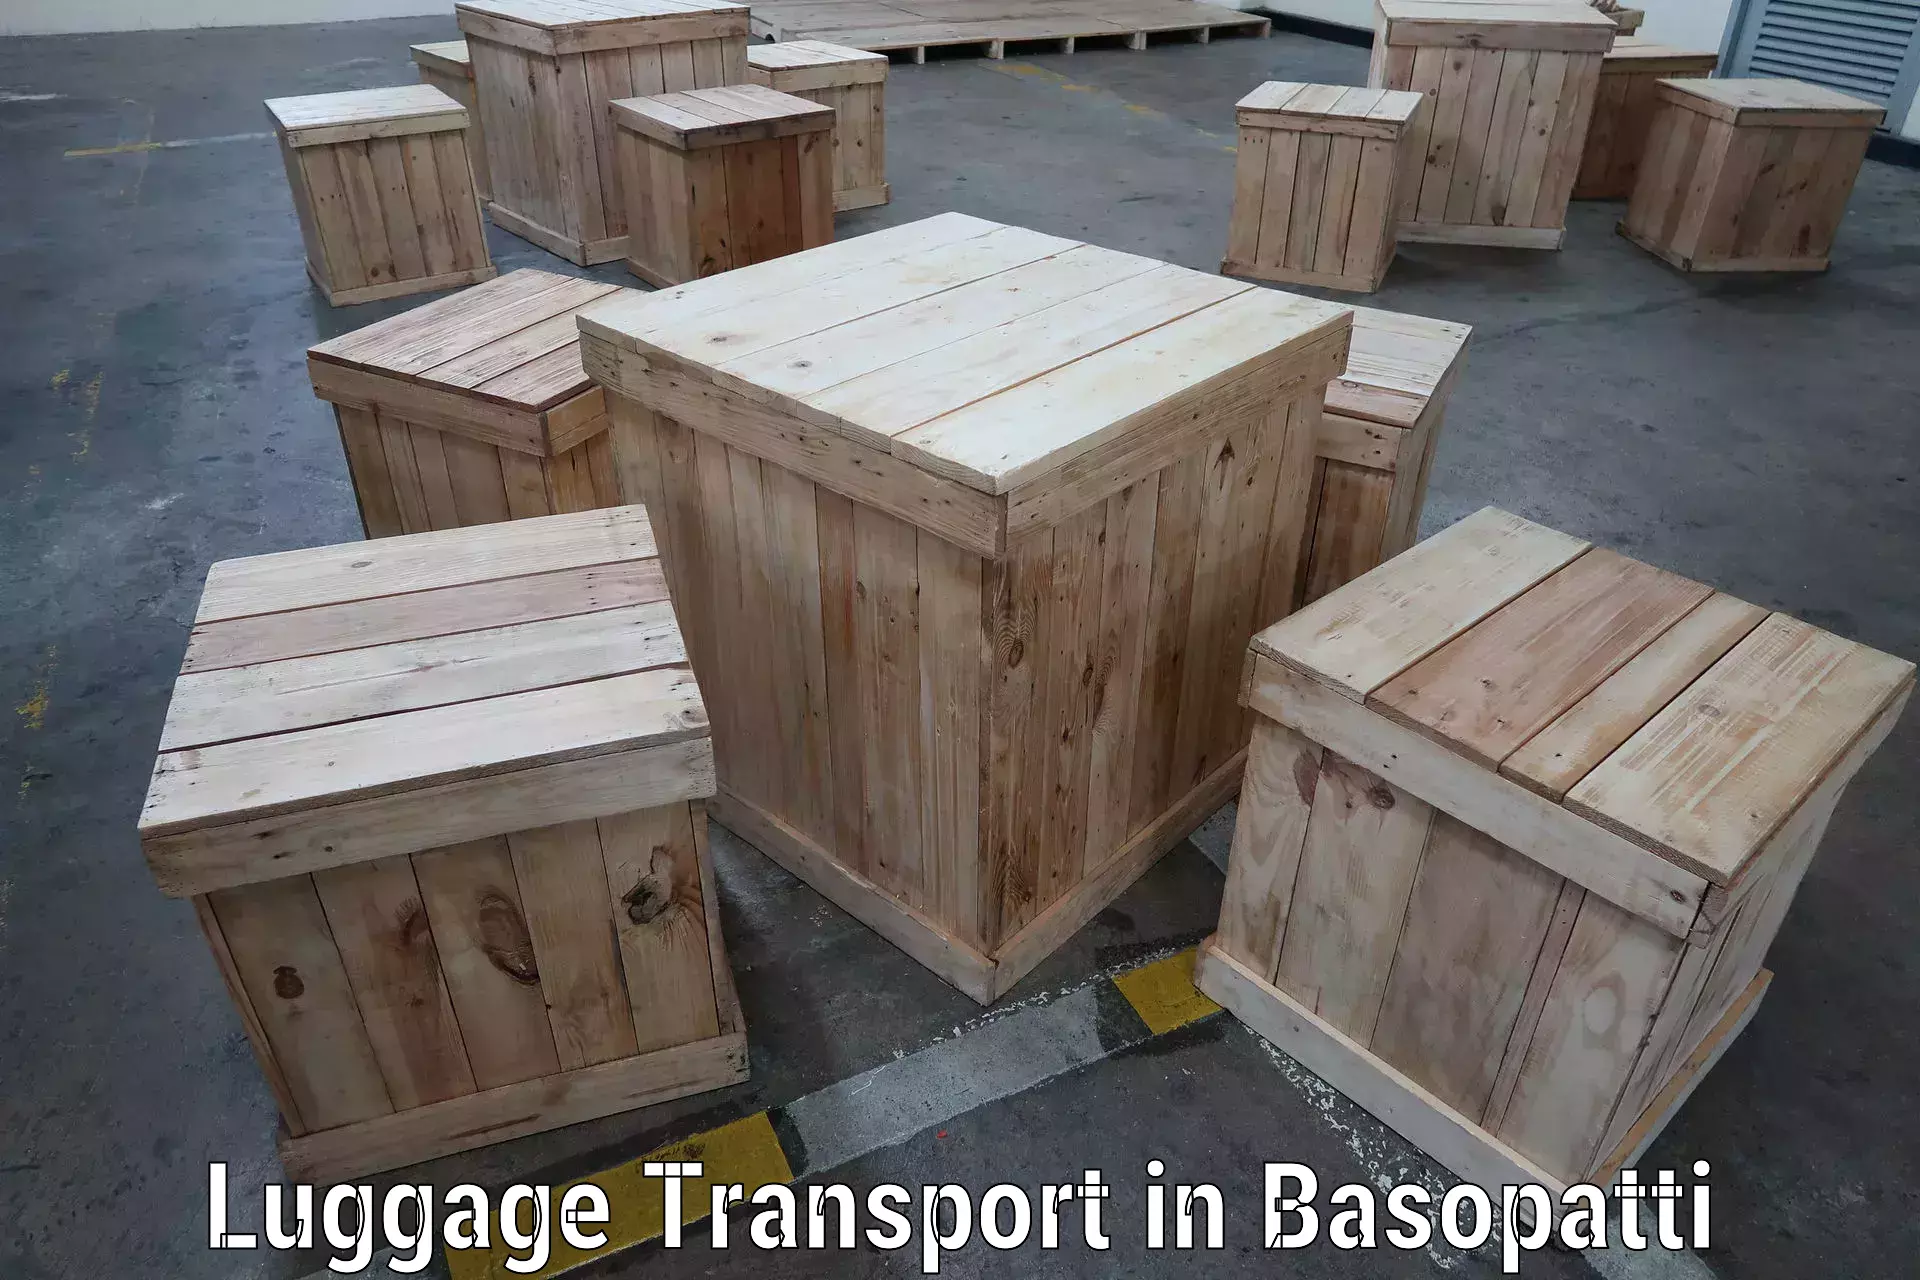 Luggage shipment processing in Basopatti